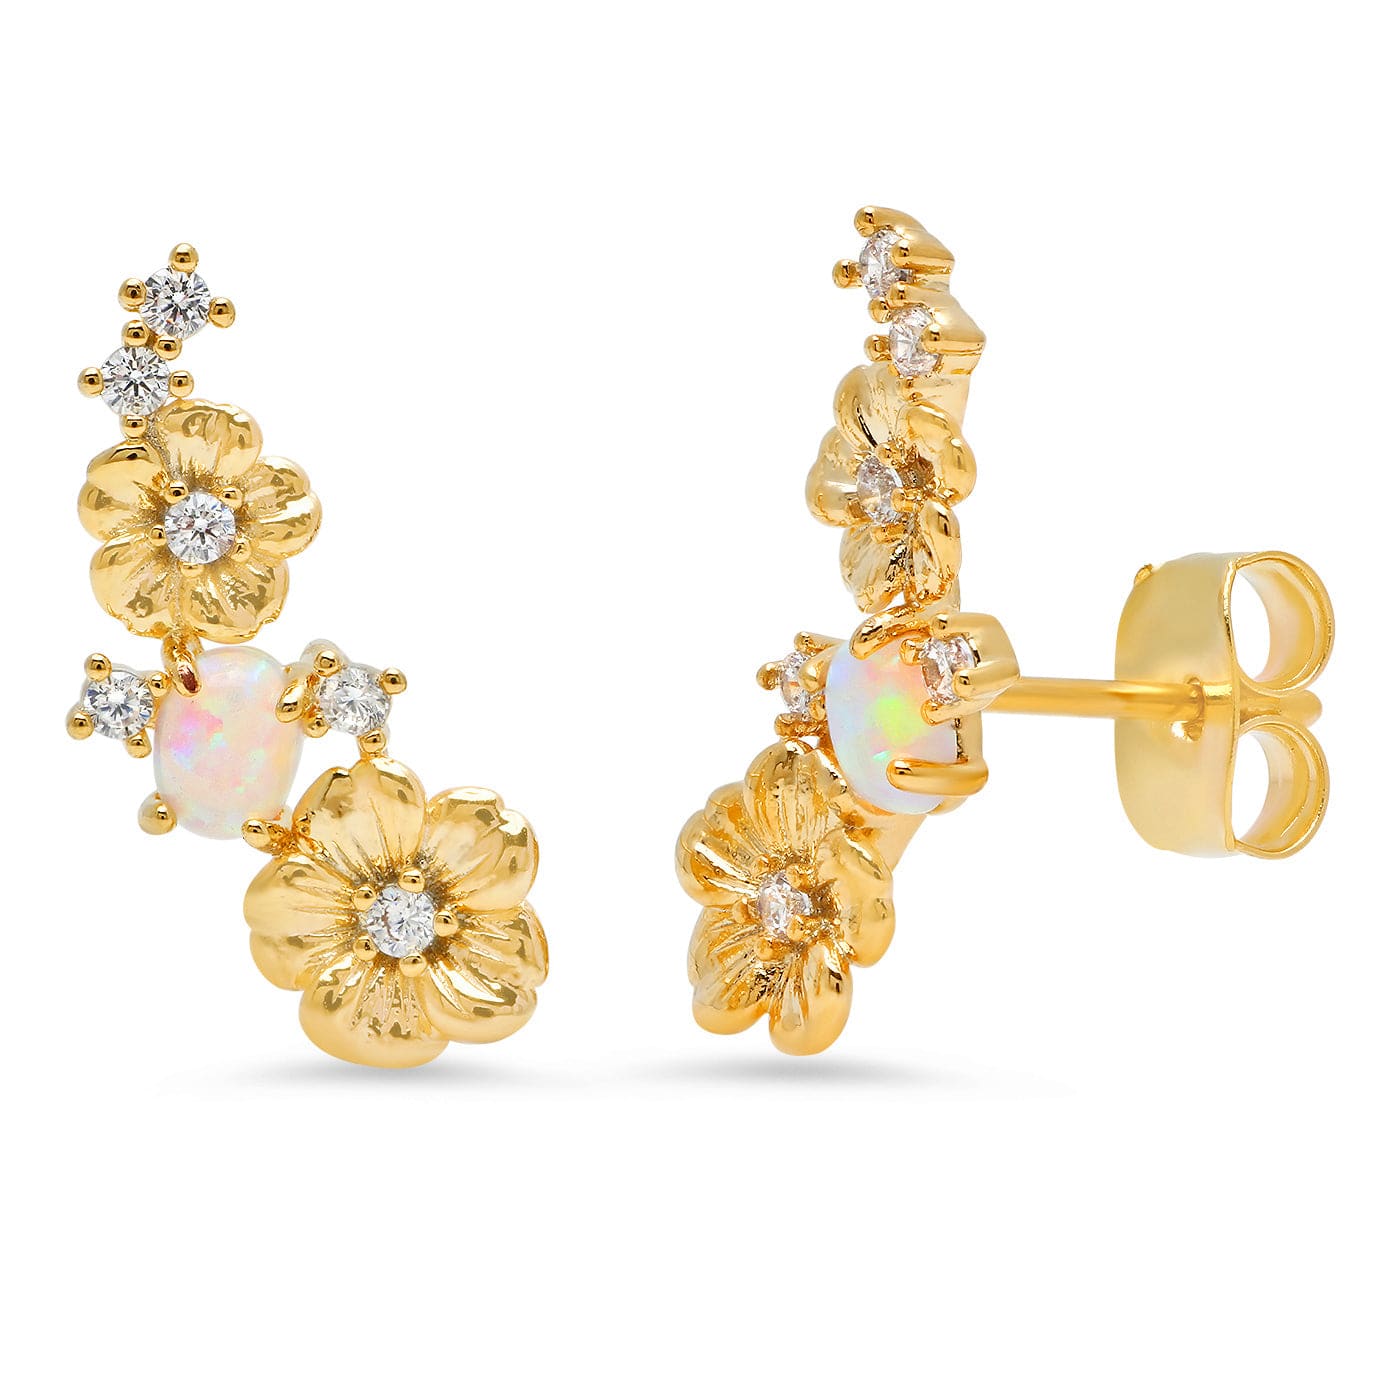 TAI JEWELRY Earrings Floral Opal Climber